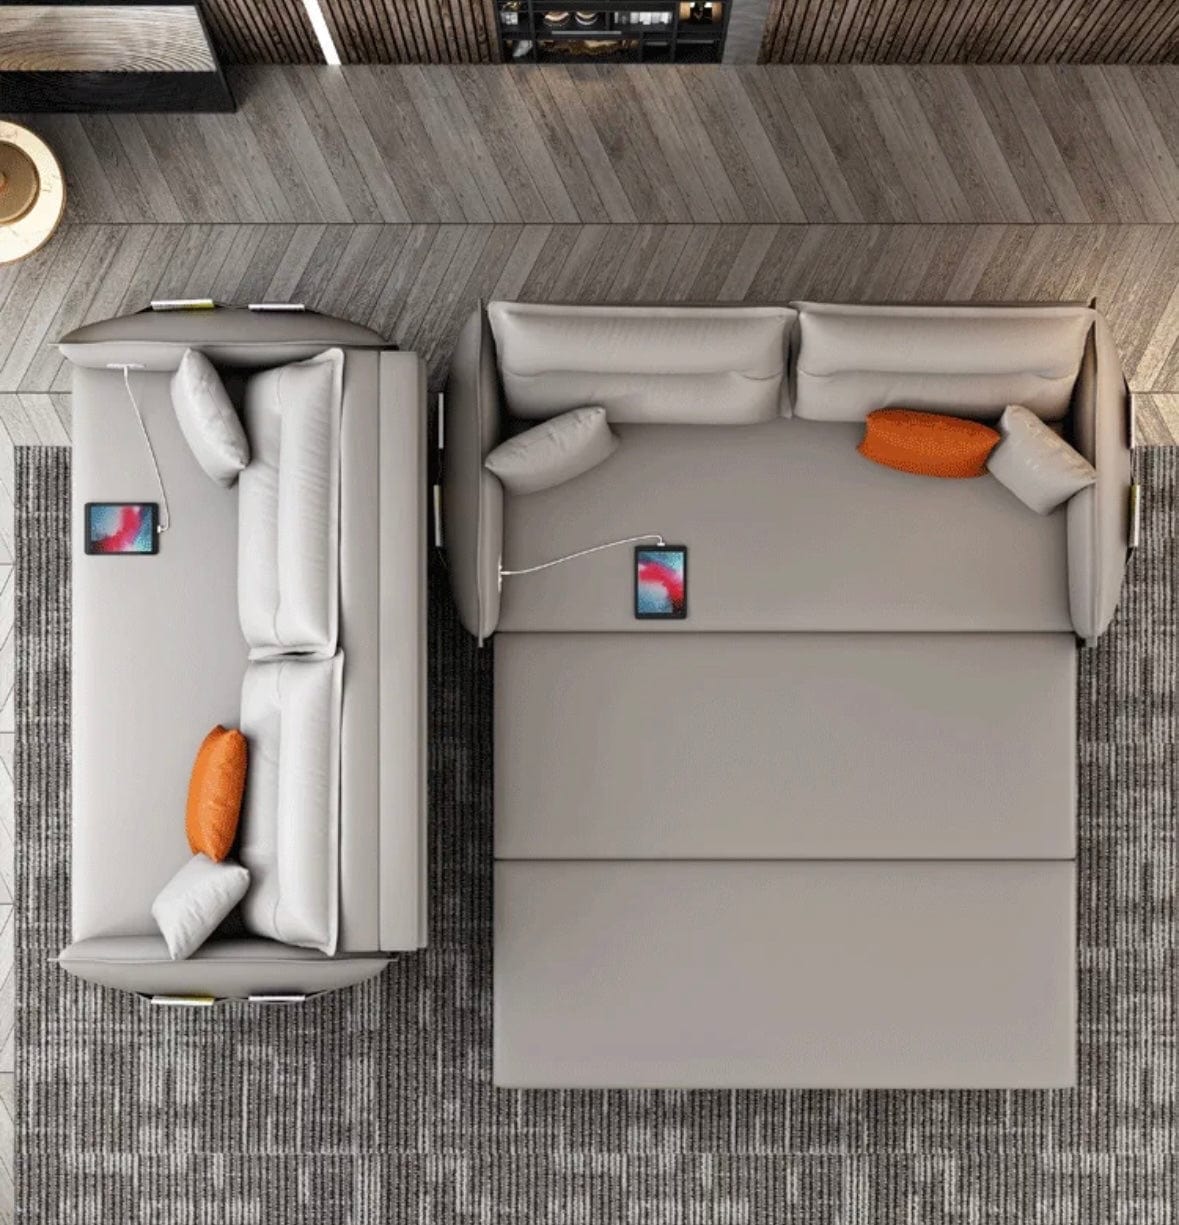 Home Atelier Leonard Electric Sofa Bed